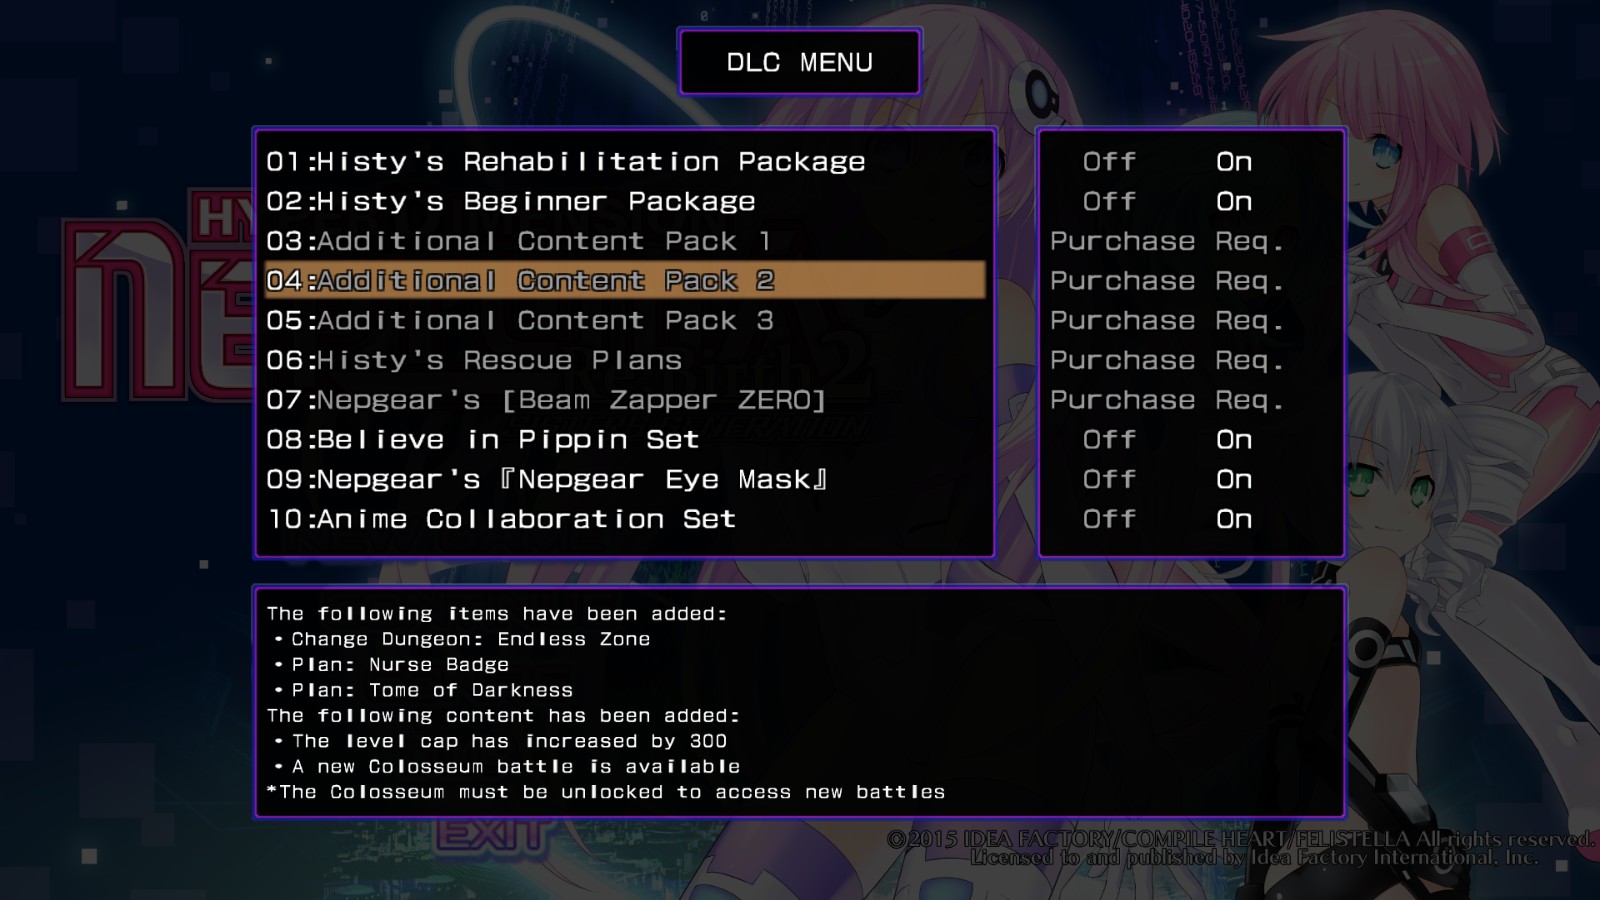 Hyperdimension Neptunia Re;Birth2 Additional Content Pack 2 Featured Screenshot #1